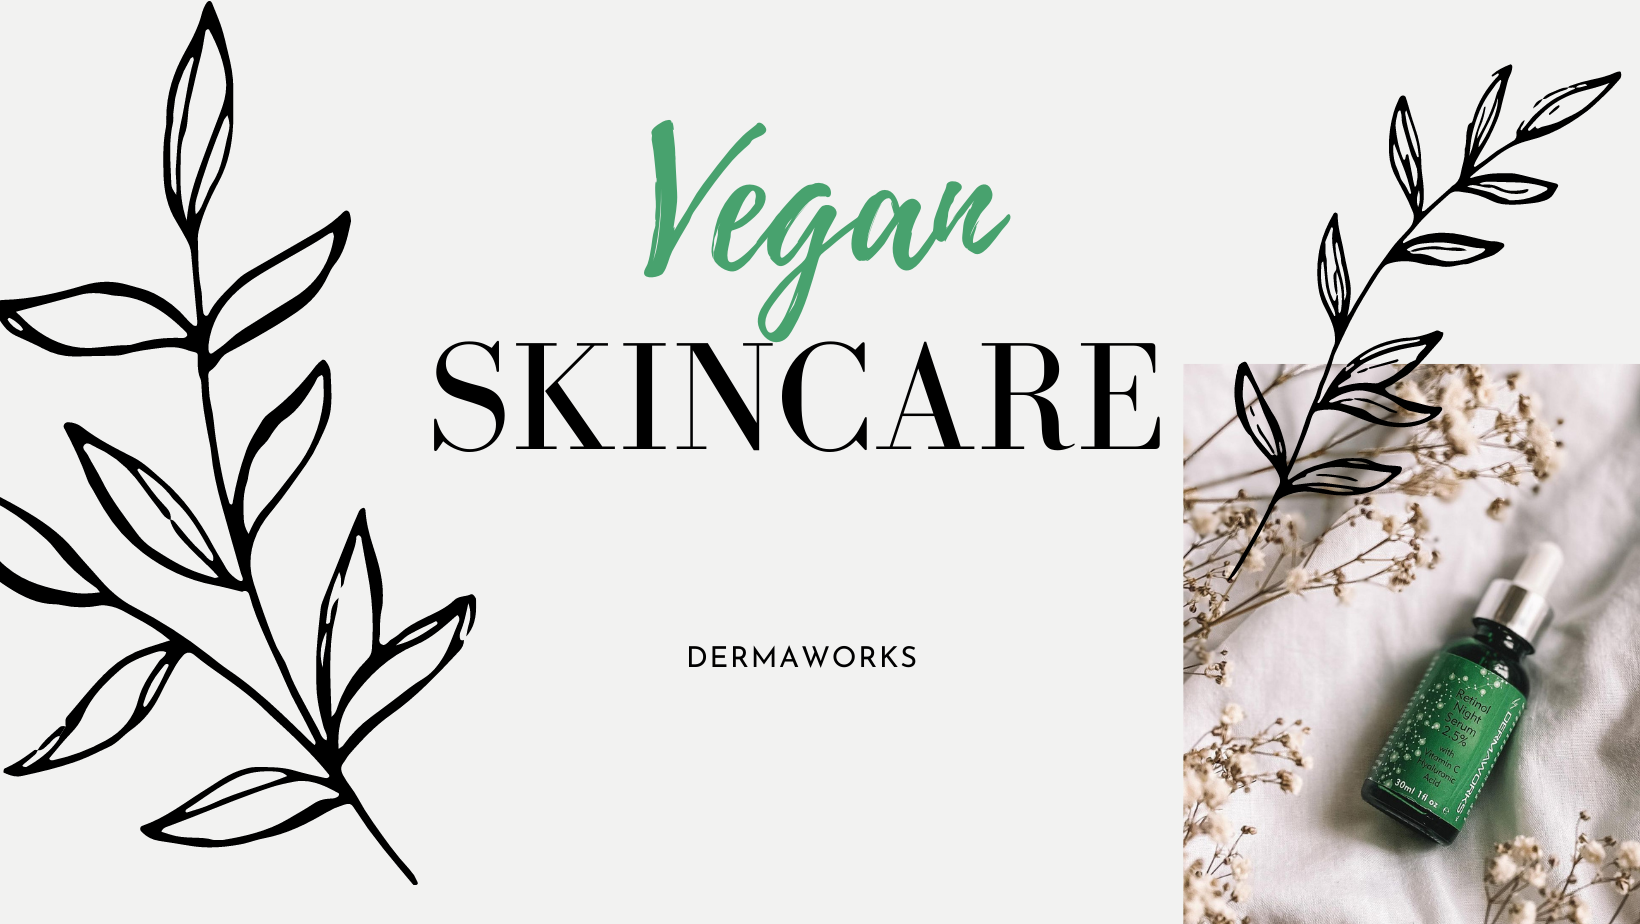 Vegan skincare and beauty 